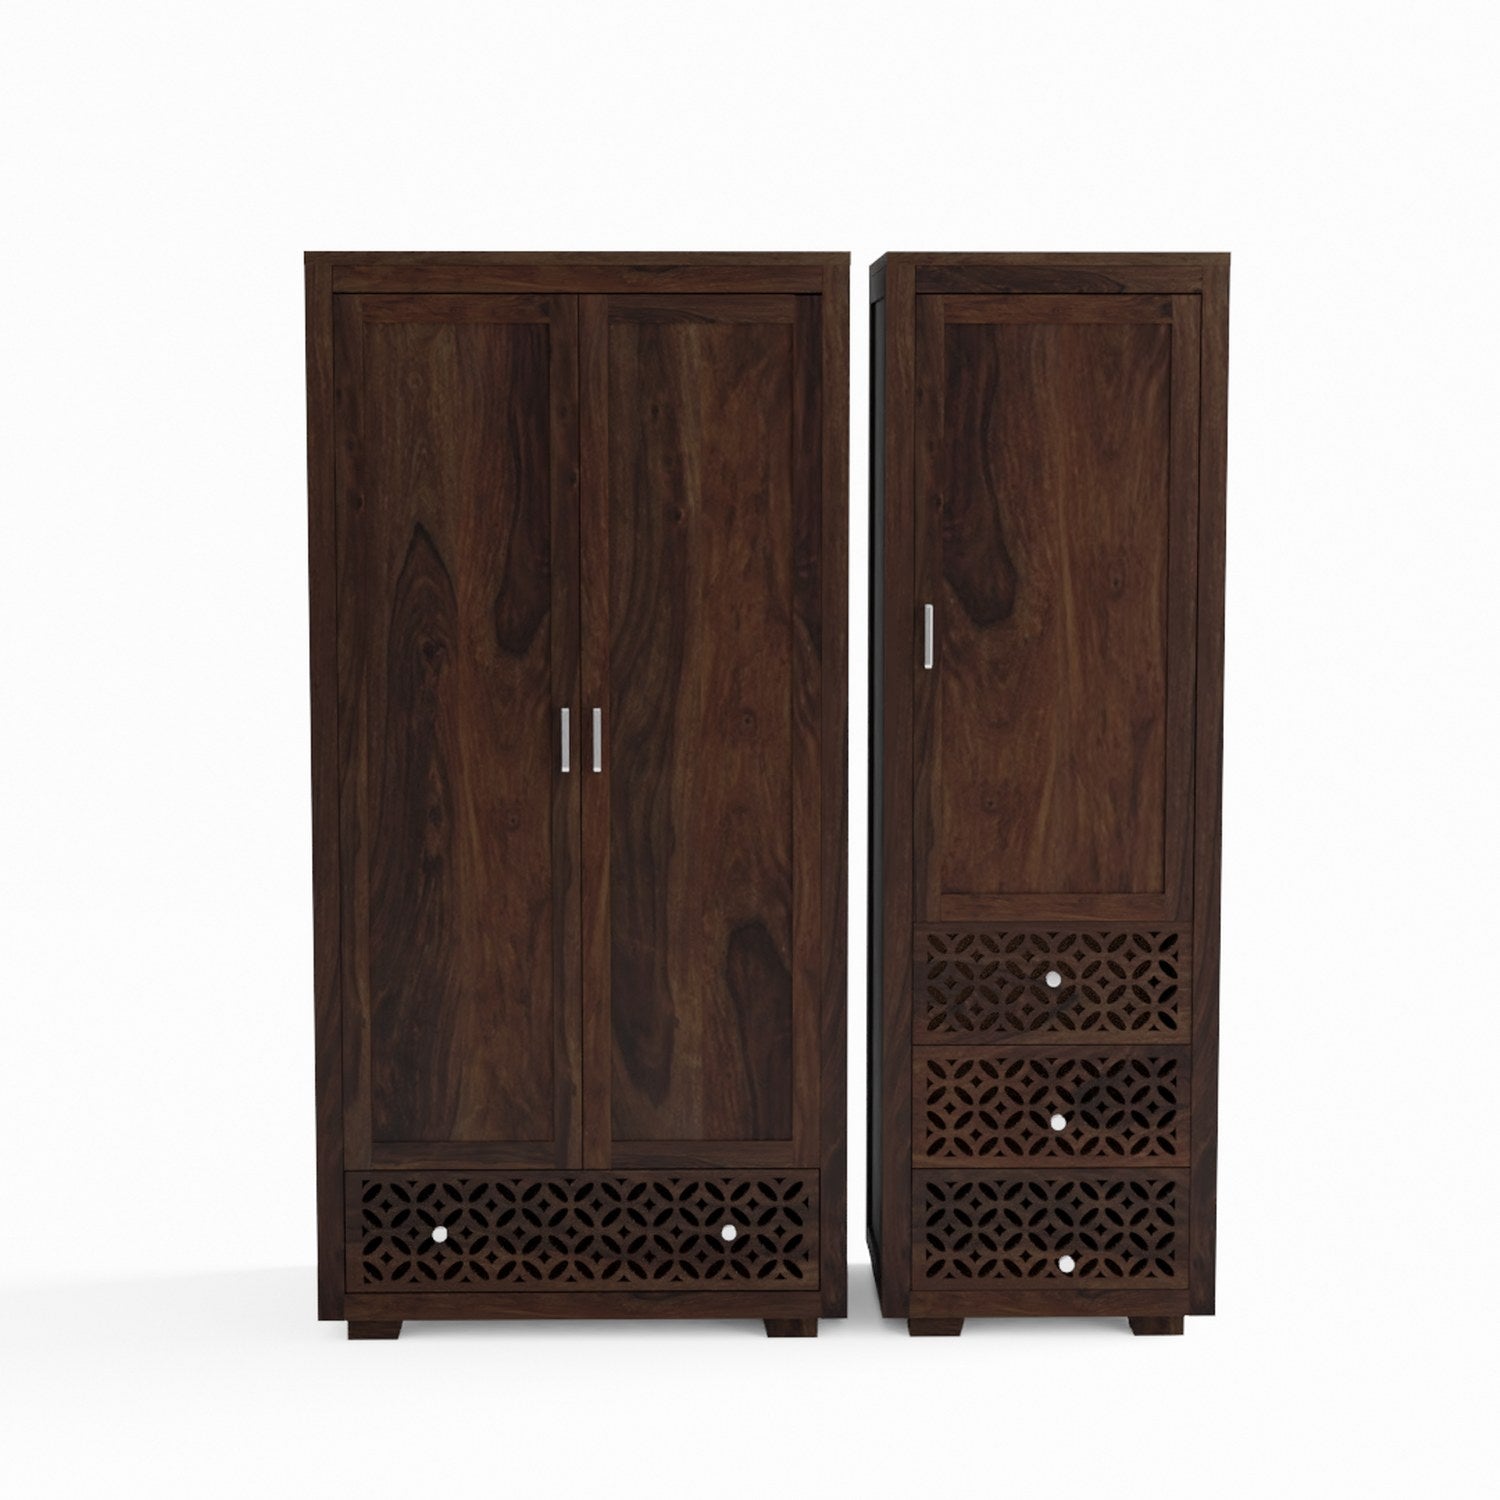 Monstro Solid Sheesham Wood Double Door Wardrobe Set (Walnut Finish)